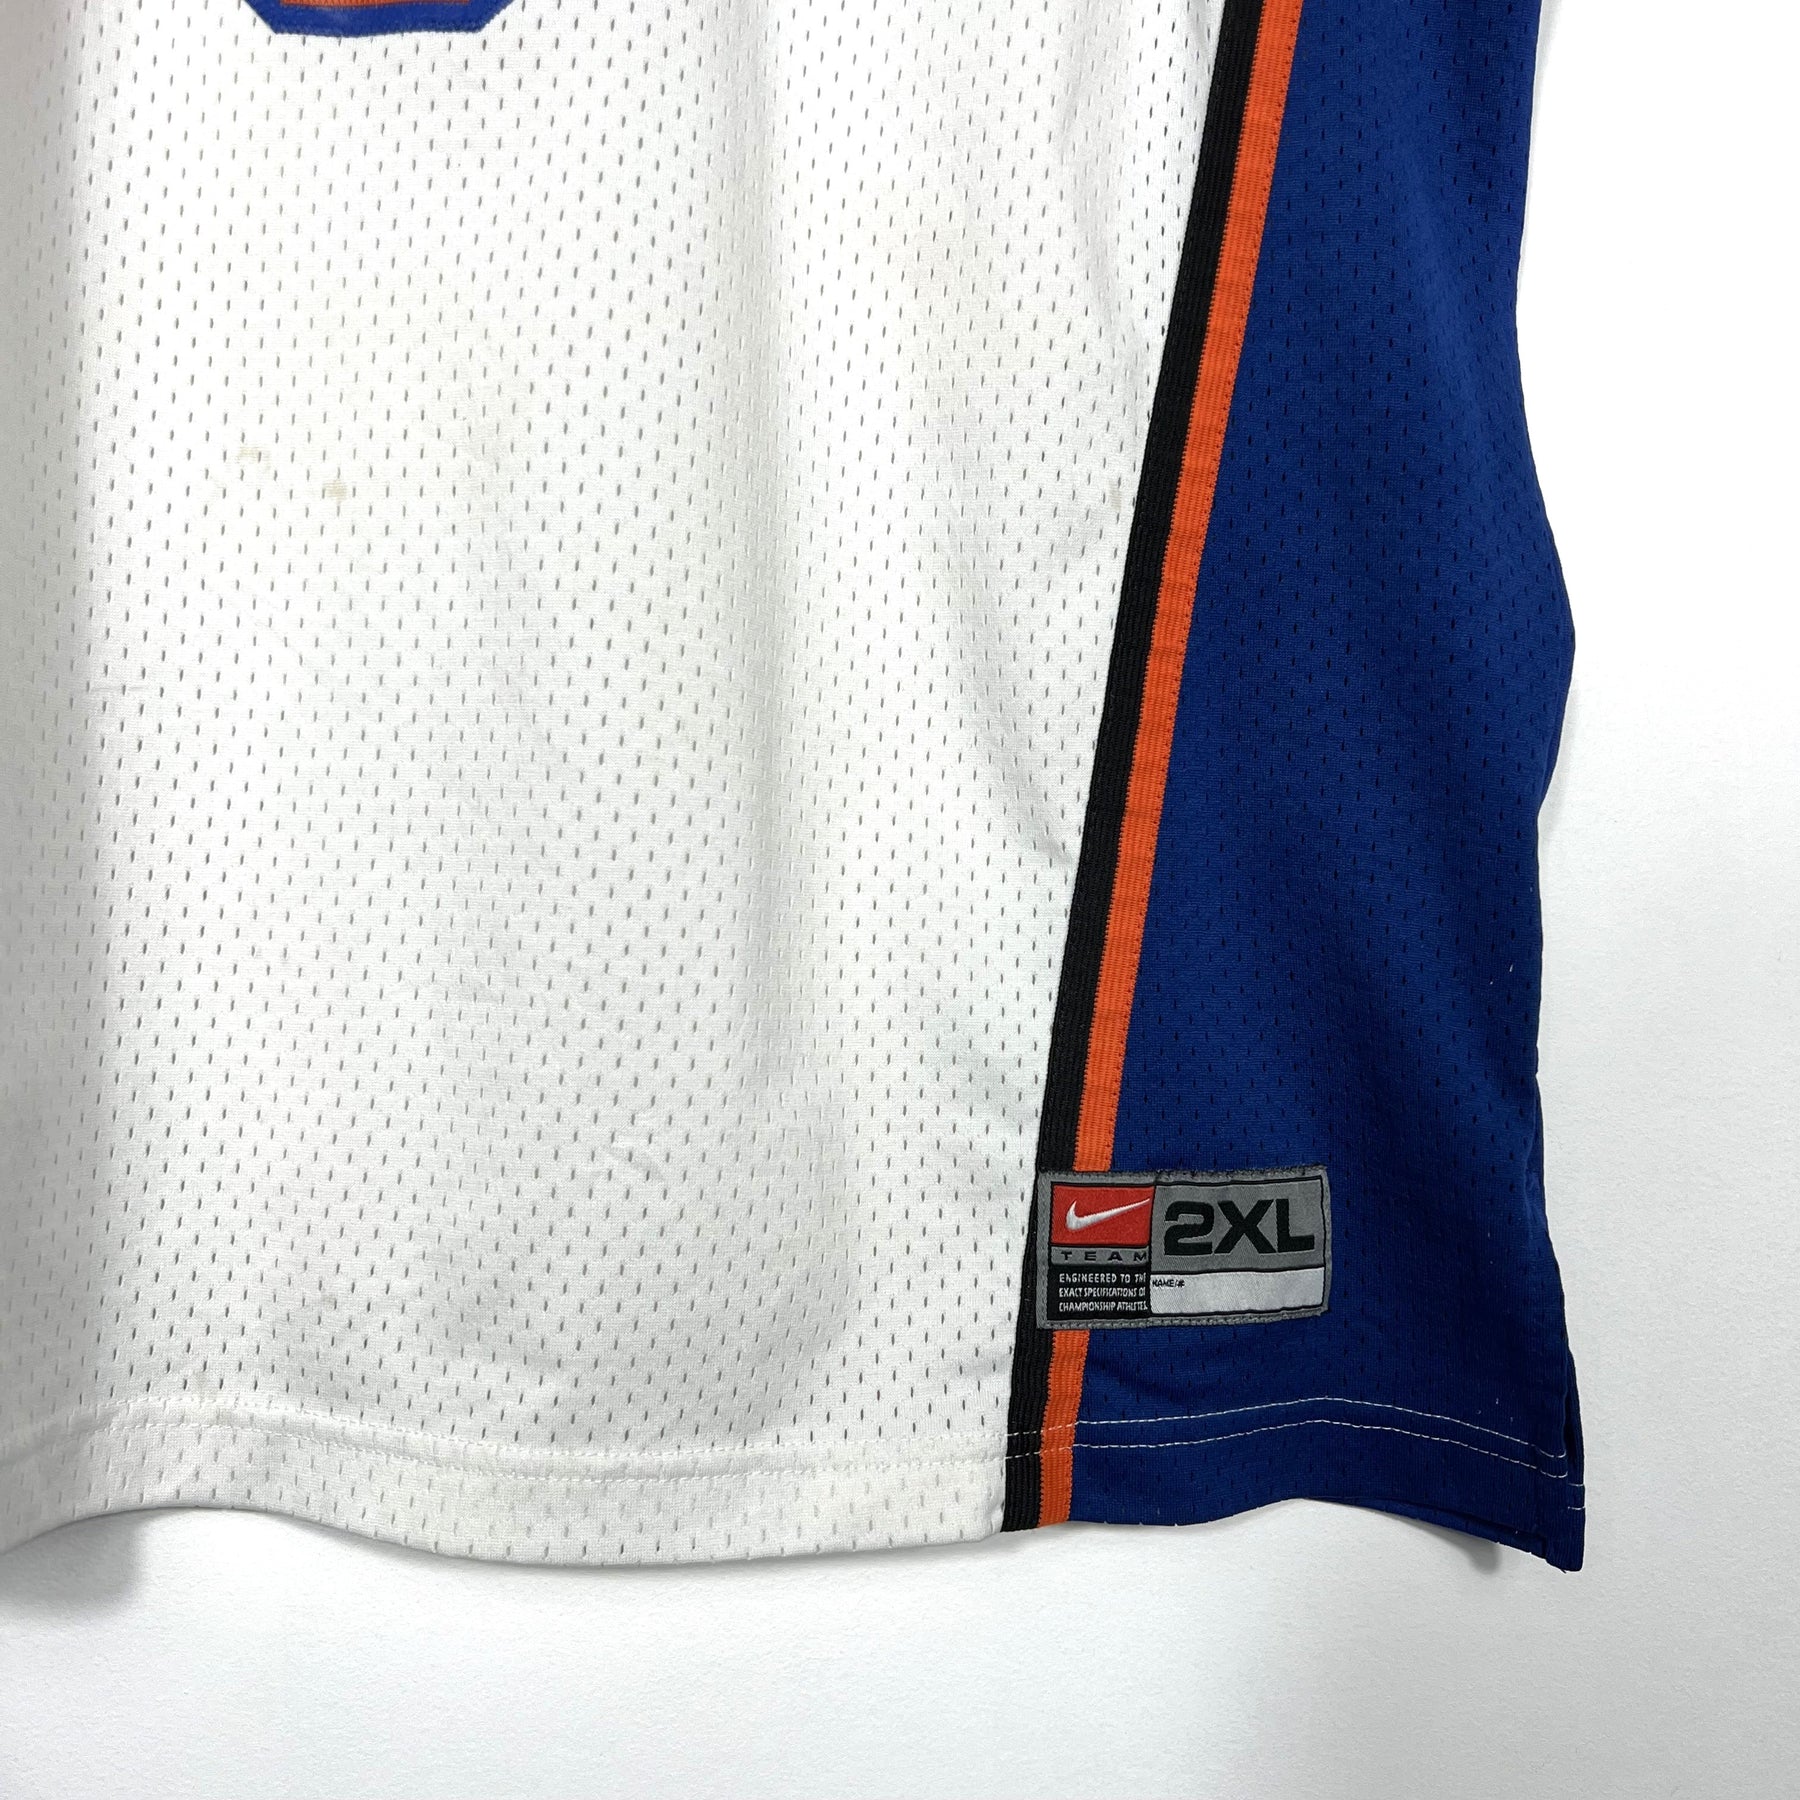 Vintage New York Knicks Latrell Sprewell 8 Nike NBA 